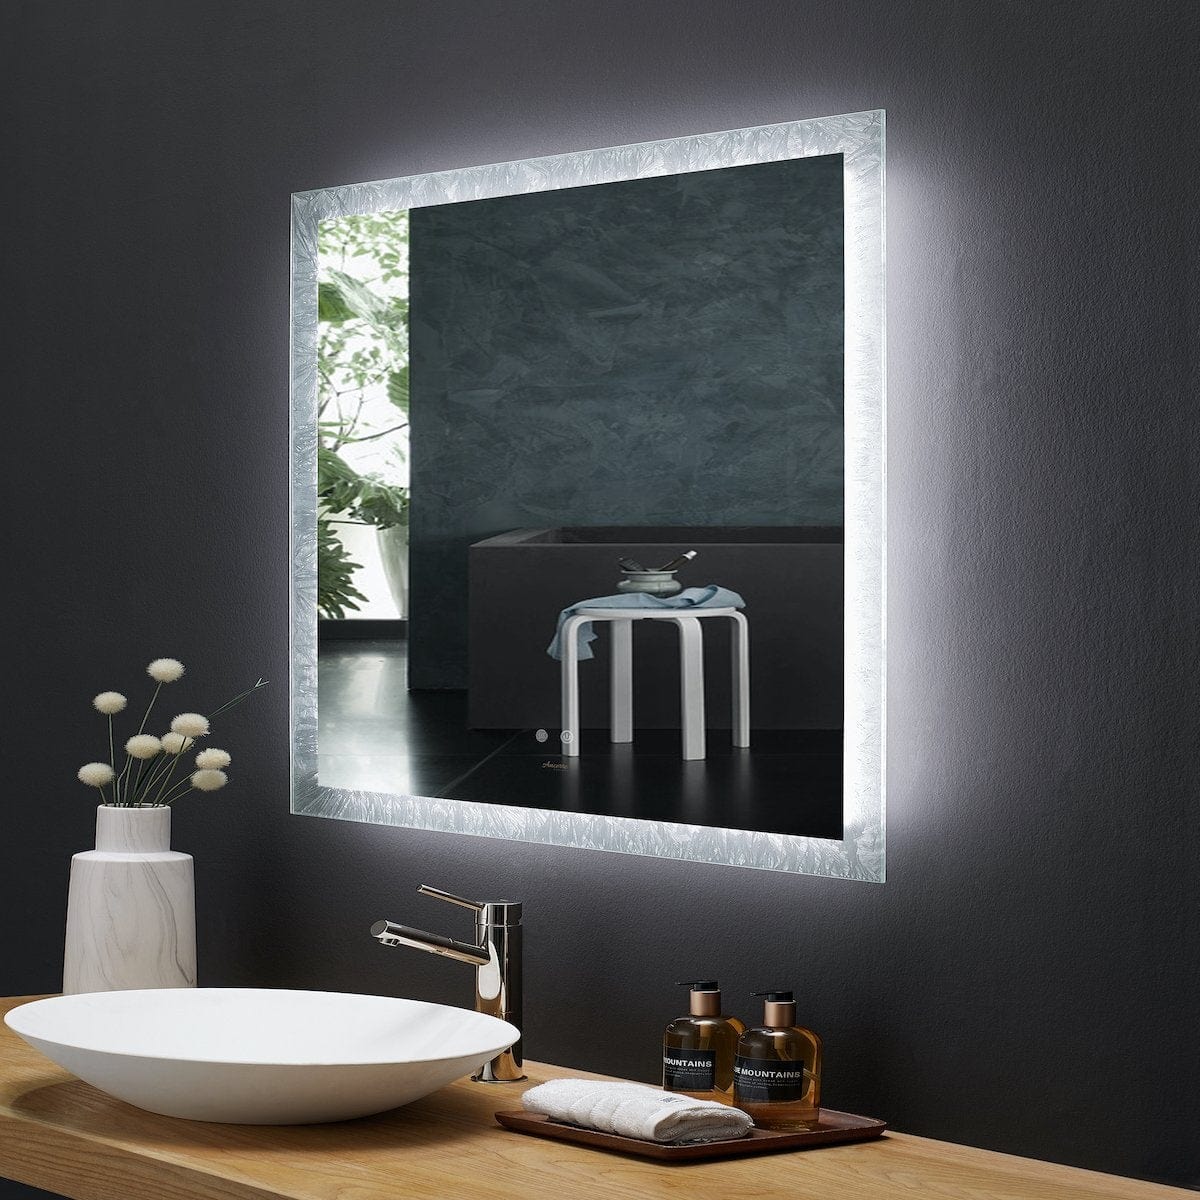 Ancerre Designs 30" LED Frysta Mirror LEDM-FRYSTA-30